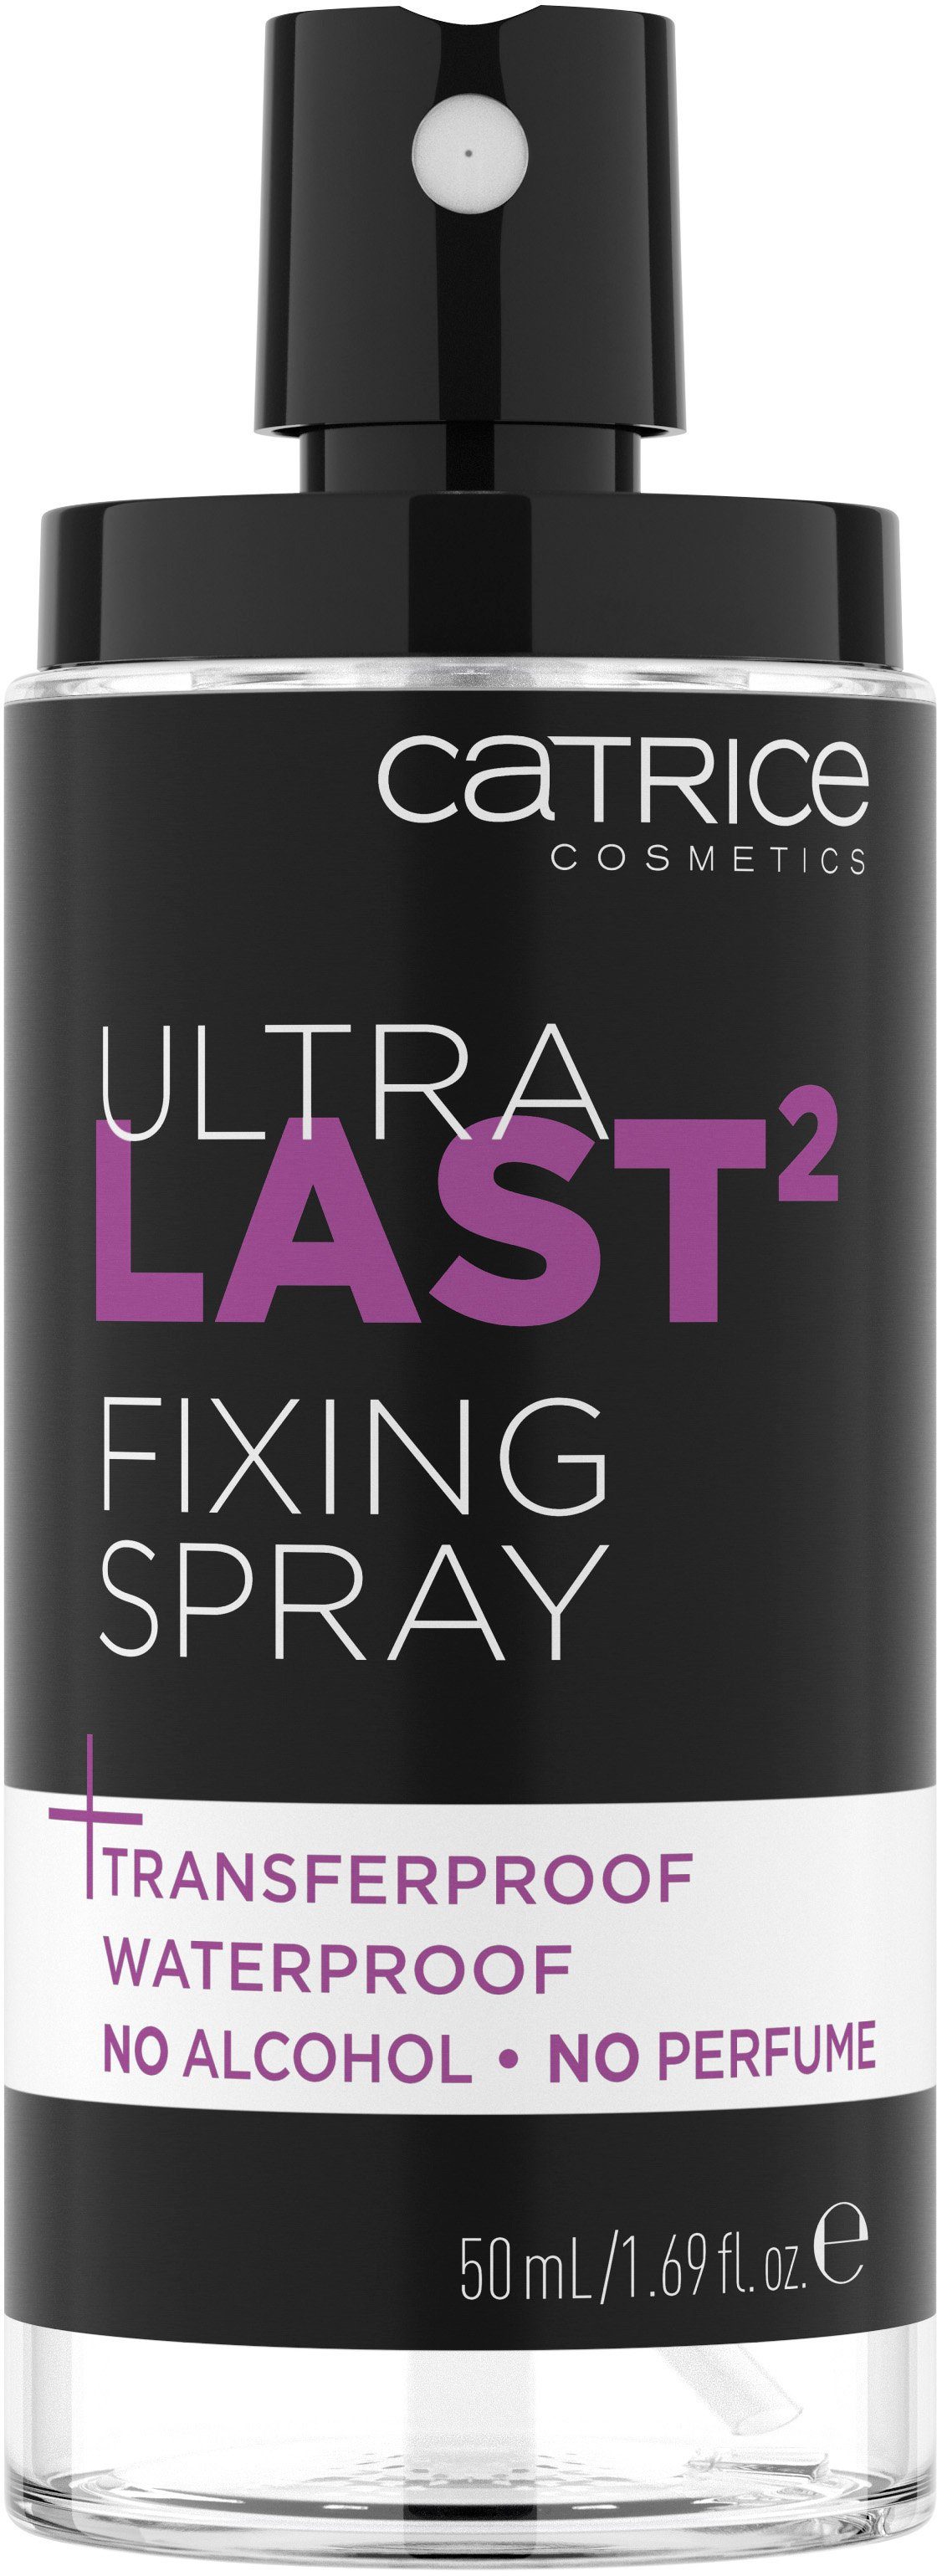 Fixing Ultra Last2 Spray, Fixierspray 3-tlg. Catrice